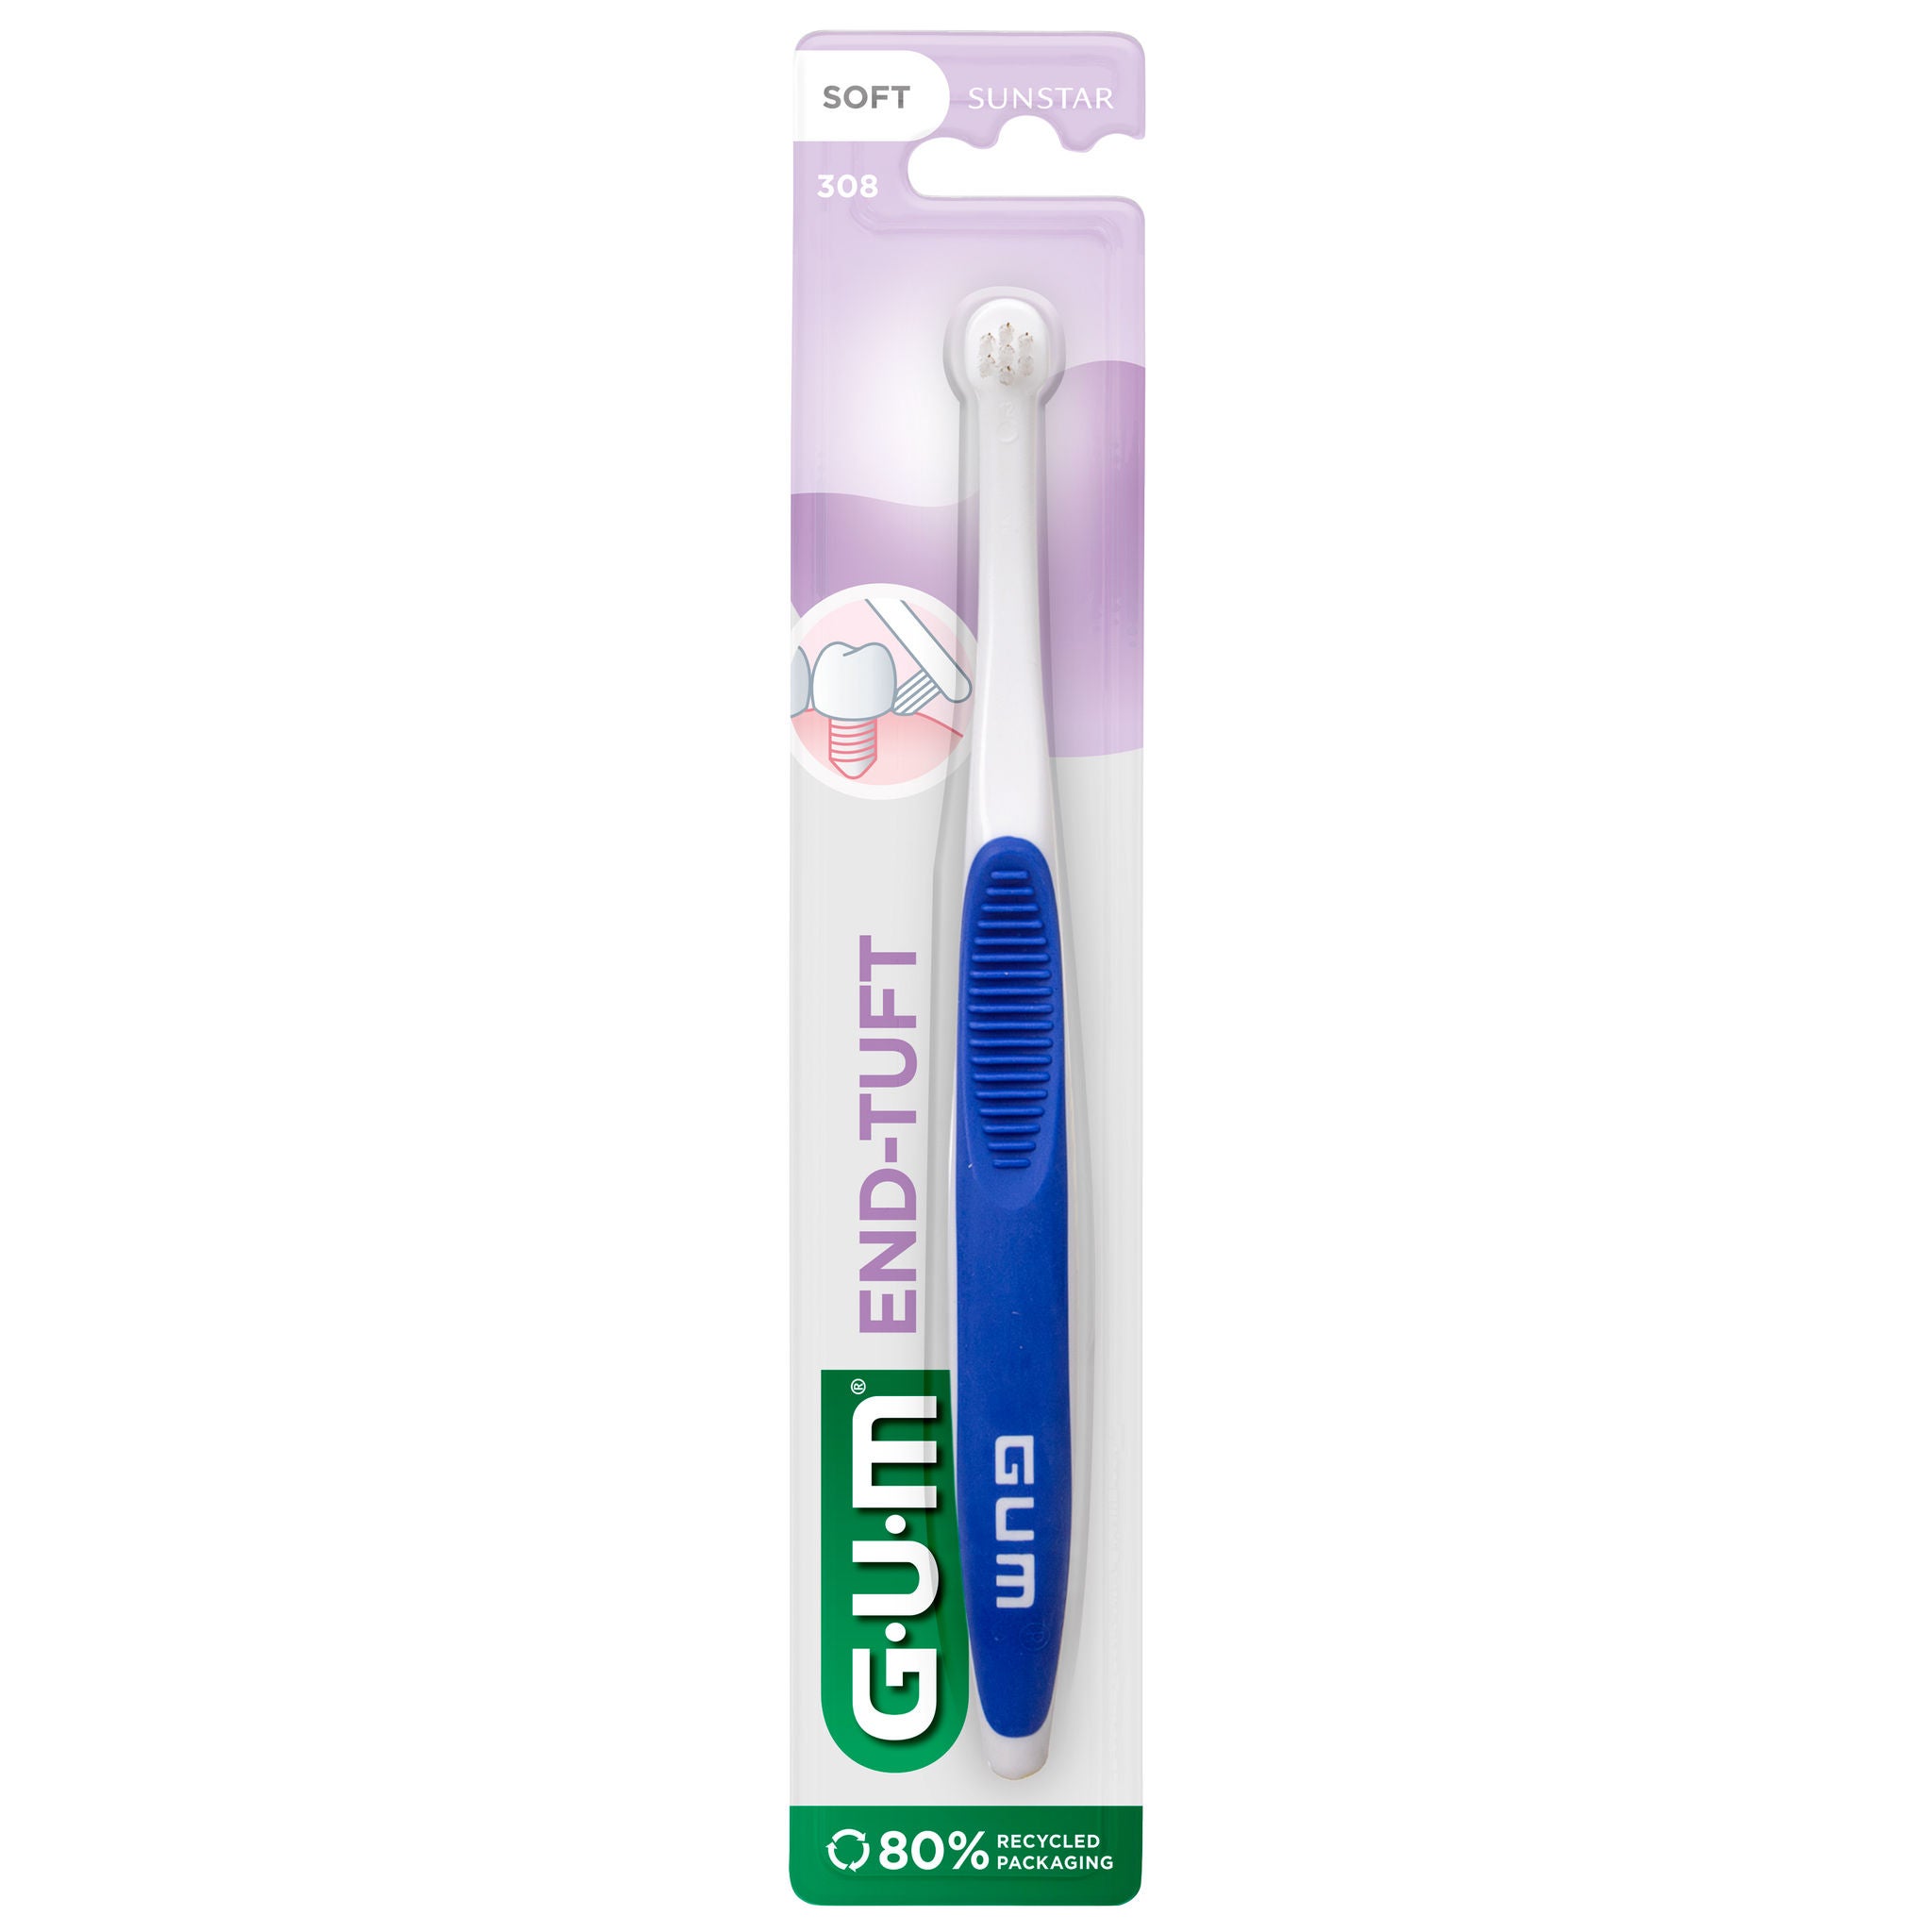 308BTM-GUM-END-TUFT-Toothbrush-Soft-Blue-1ct-P1-Mock-Up.jpg